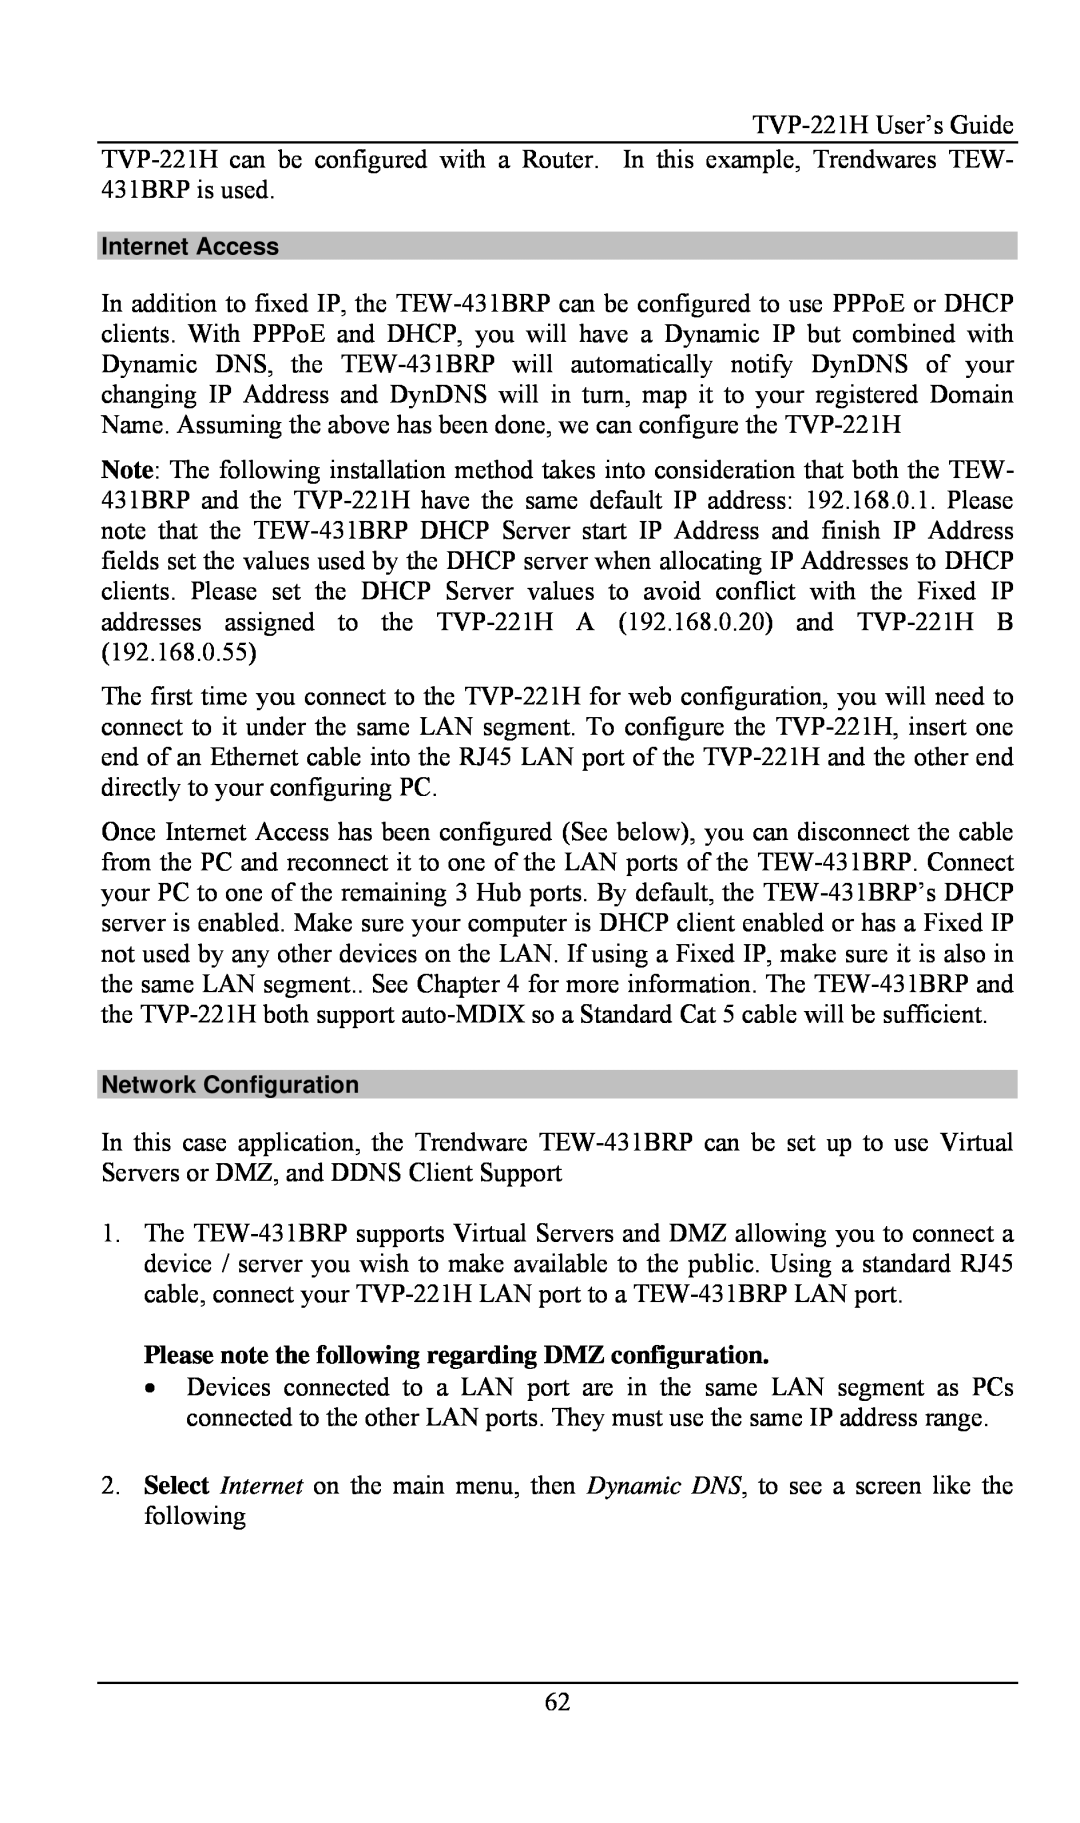 TRENDnet TVP- 221H manual Please note the following regarding DMZ configuration, Internet Access, Network Configuration 